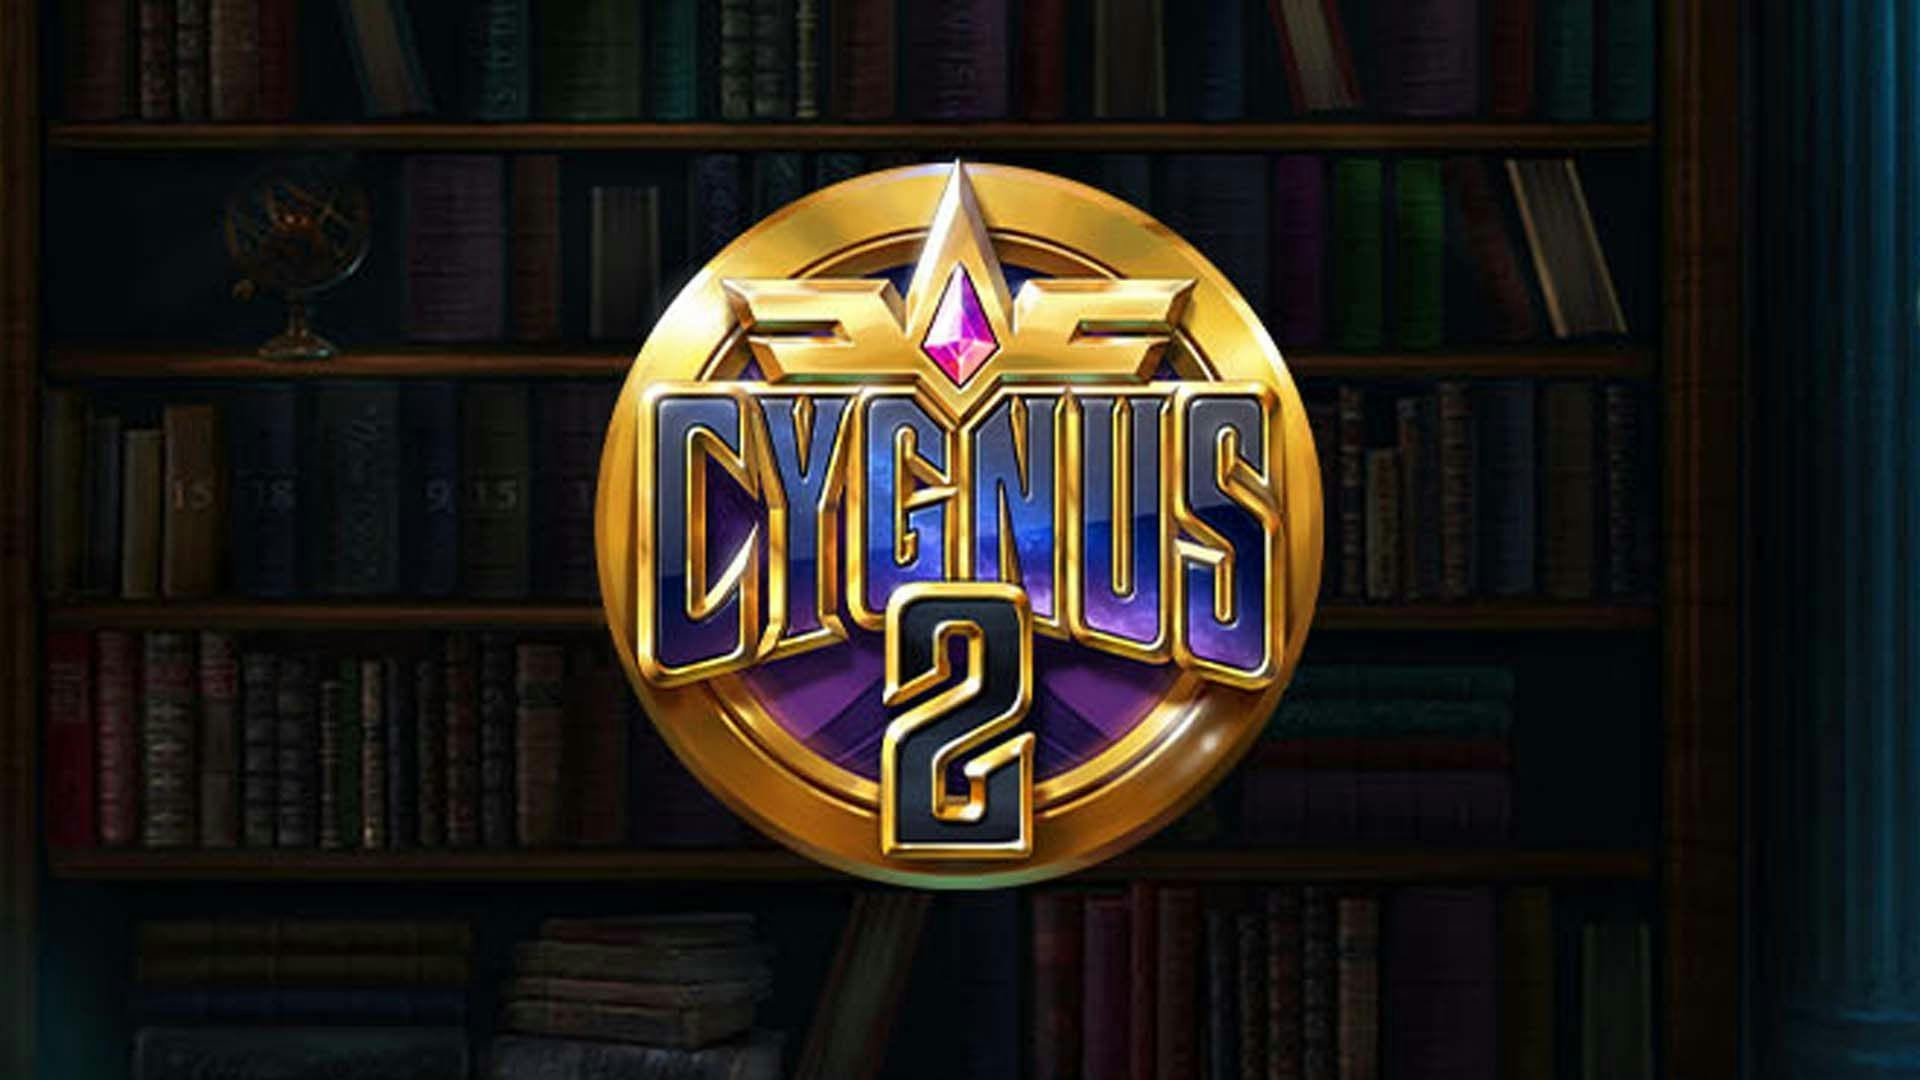 Cygnus 2 Slot Machine Online Free Game Play